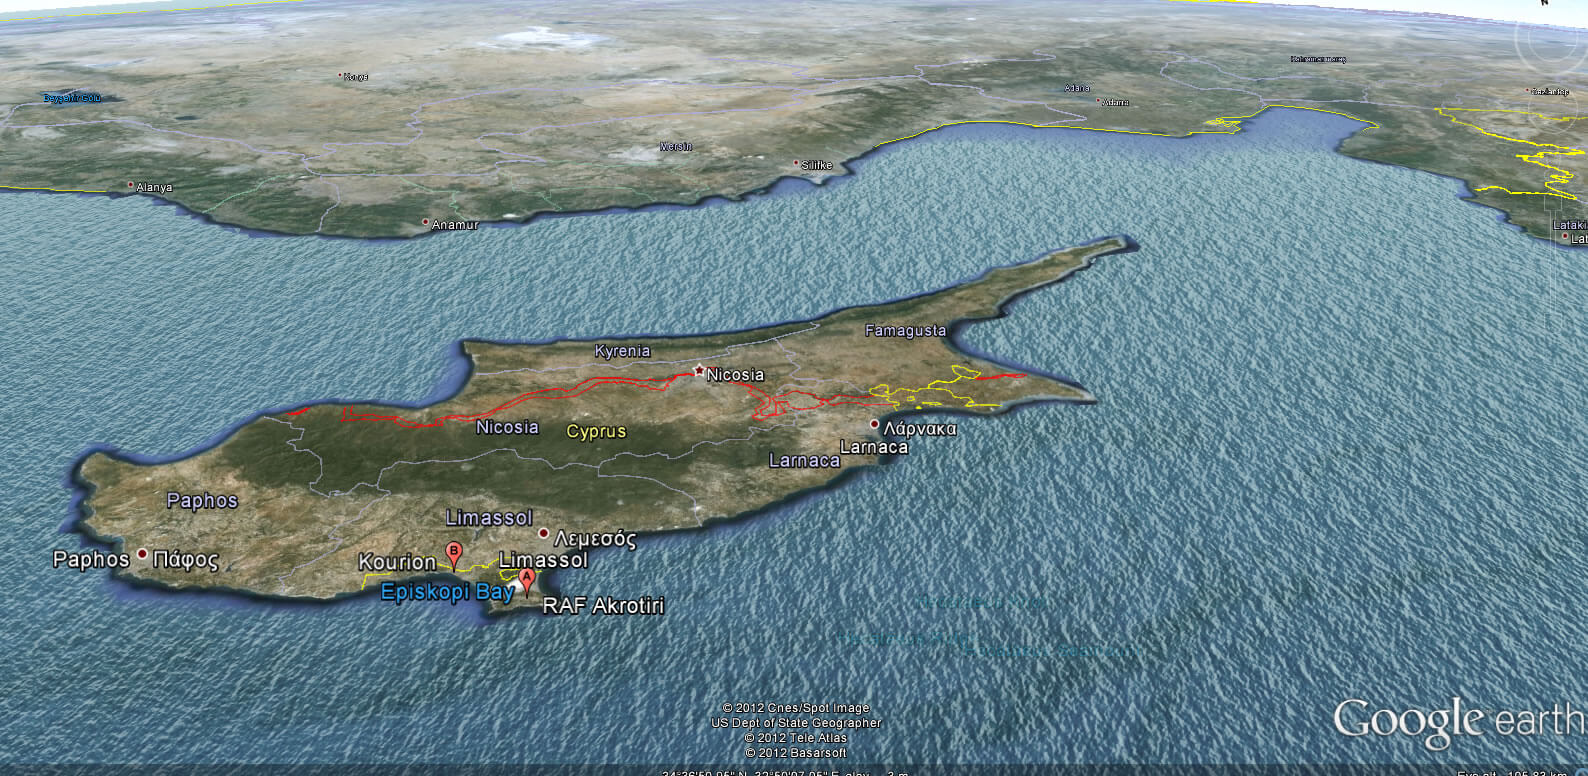 Akrotiri and Dhekelia Earth Map